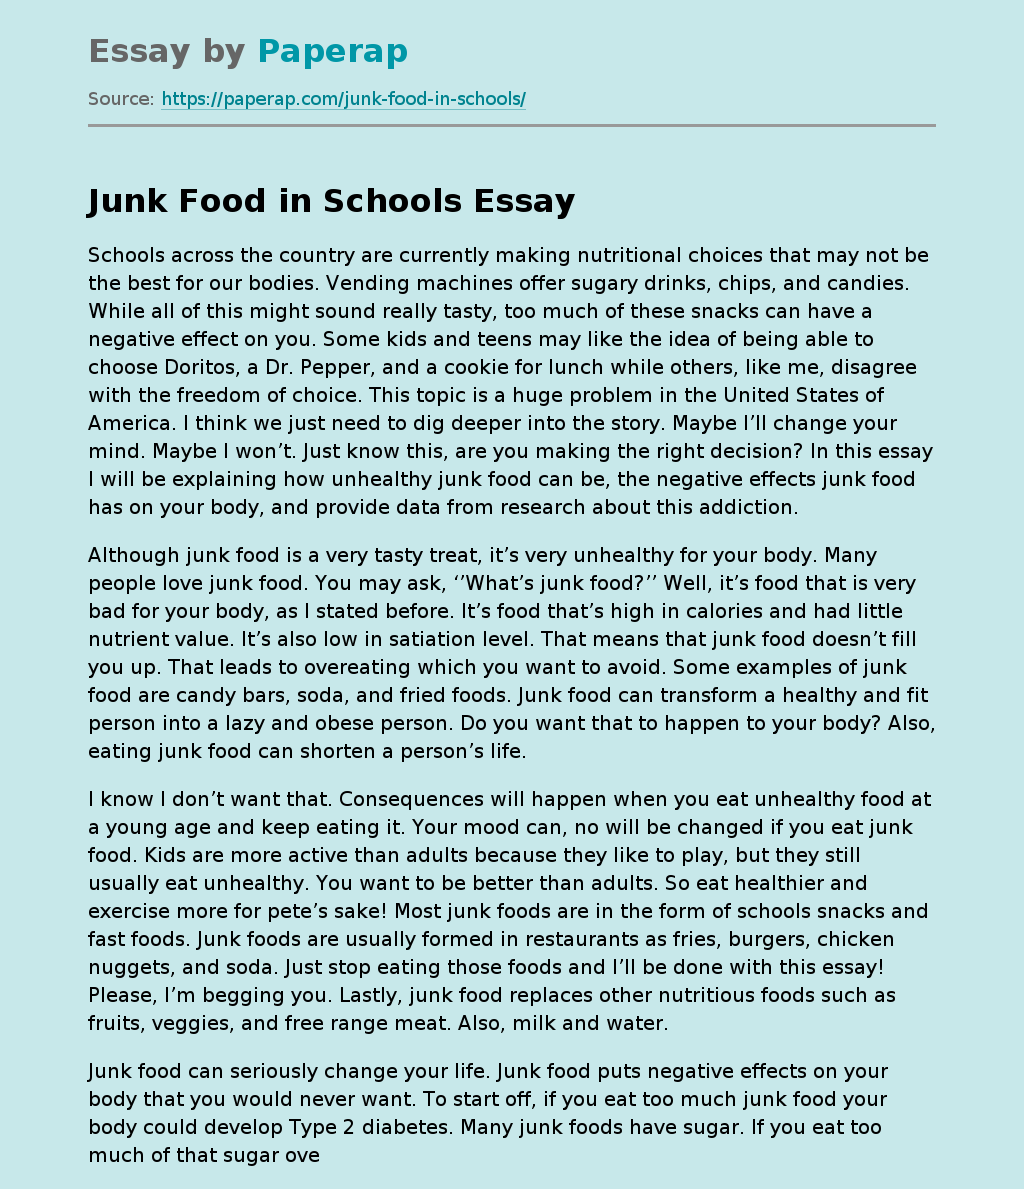 Junk Food in Schools